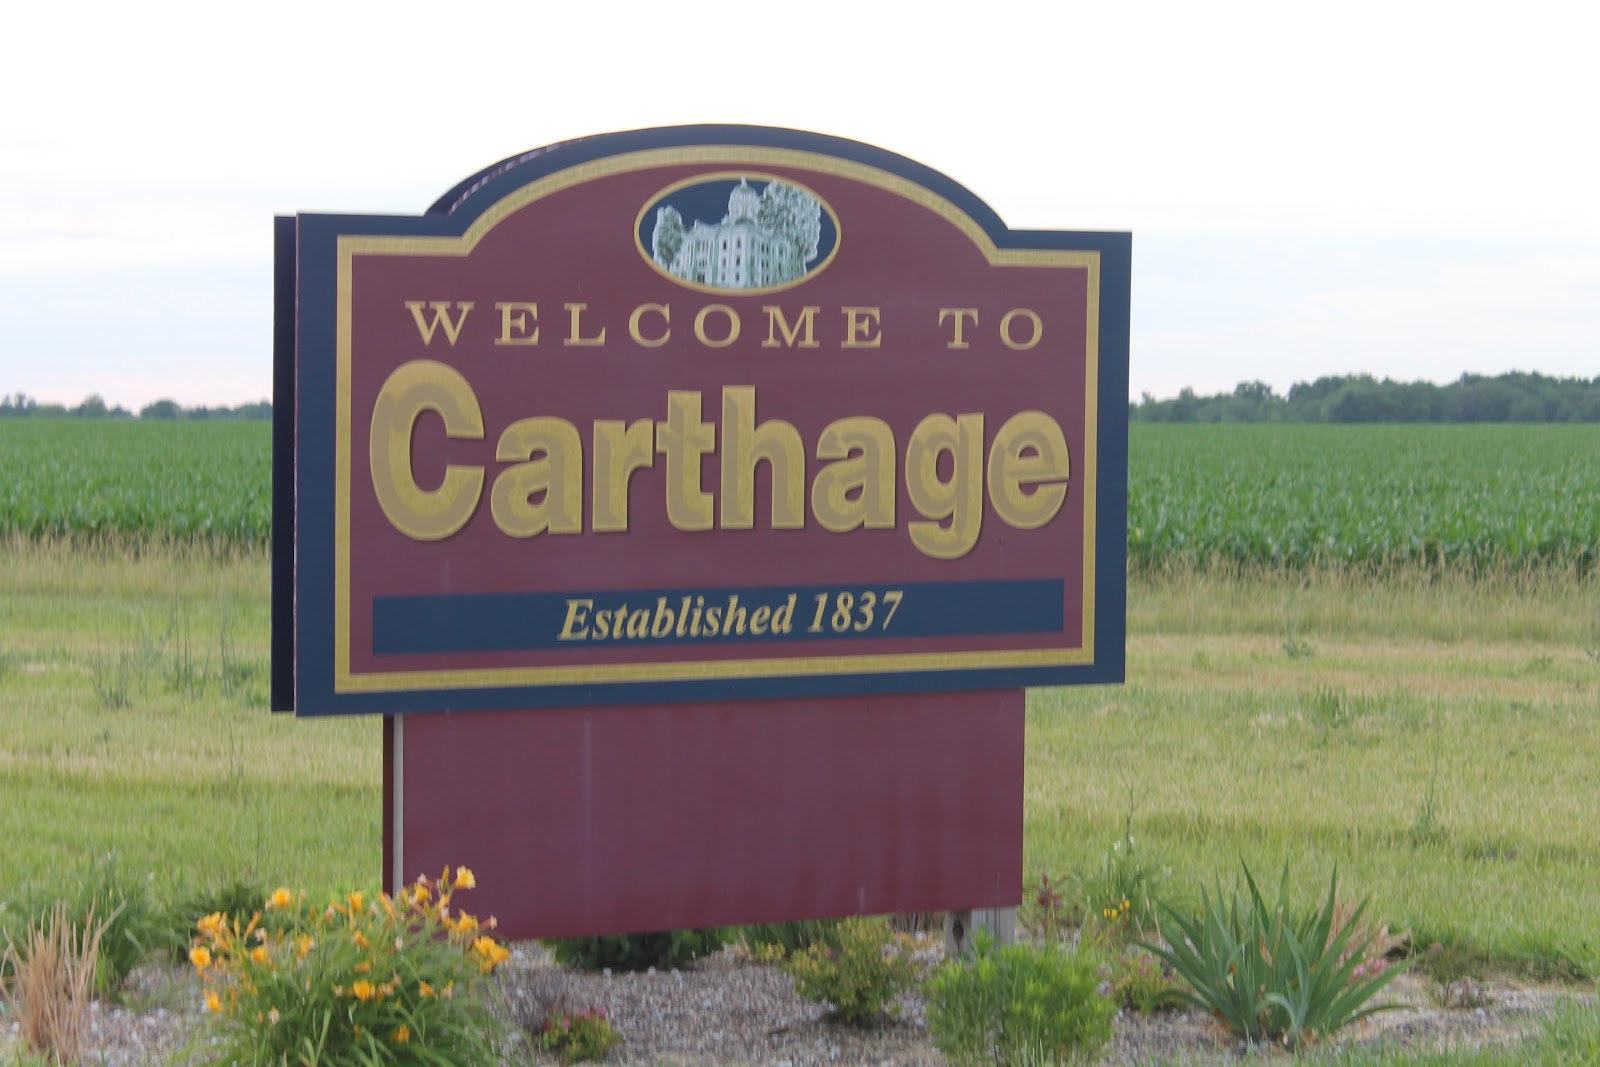 carthage